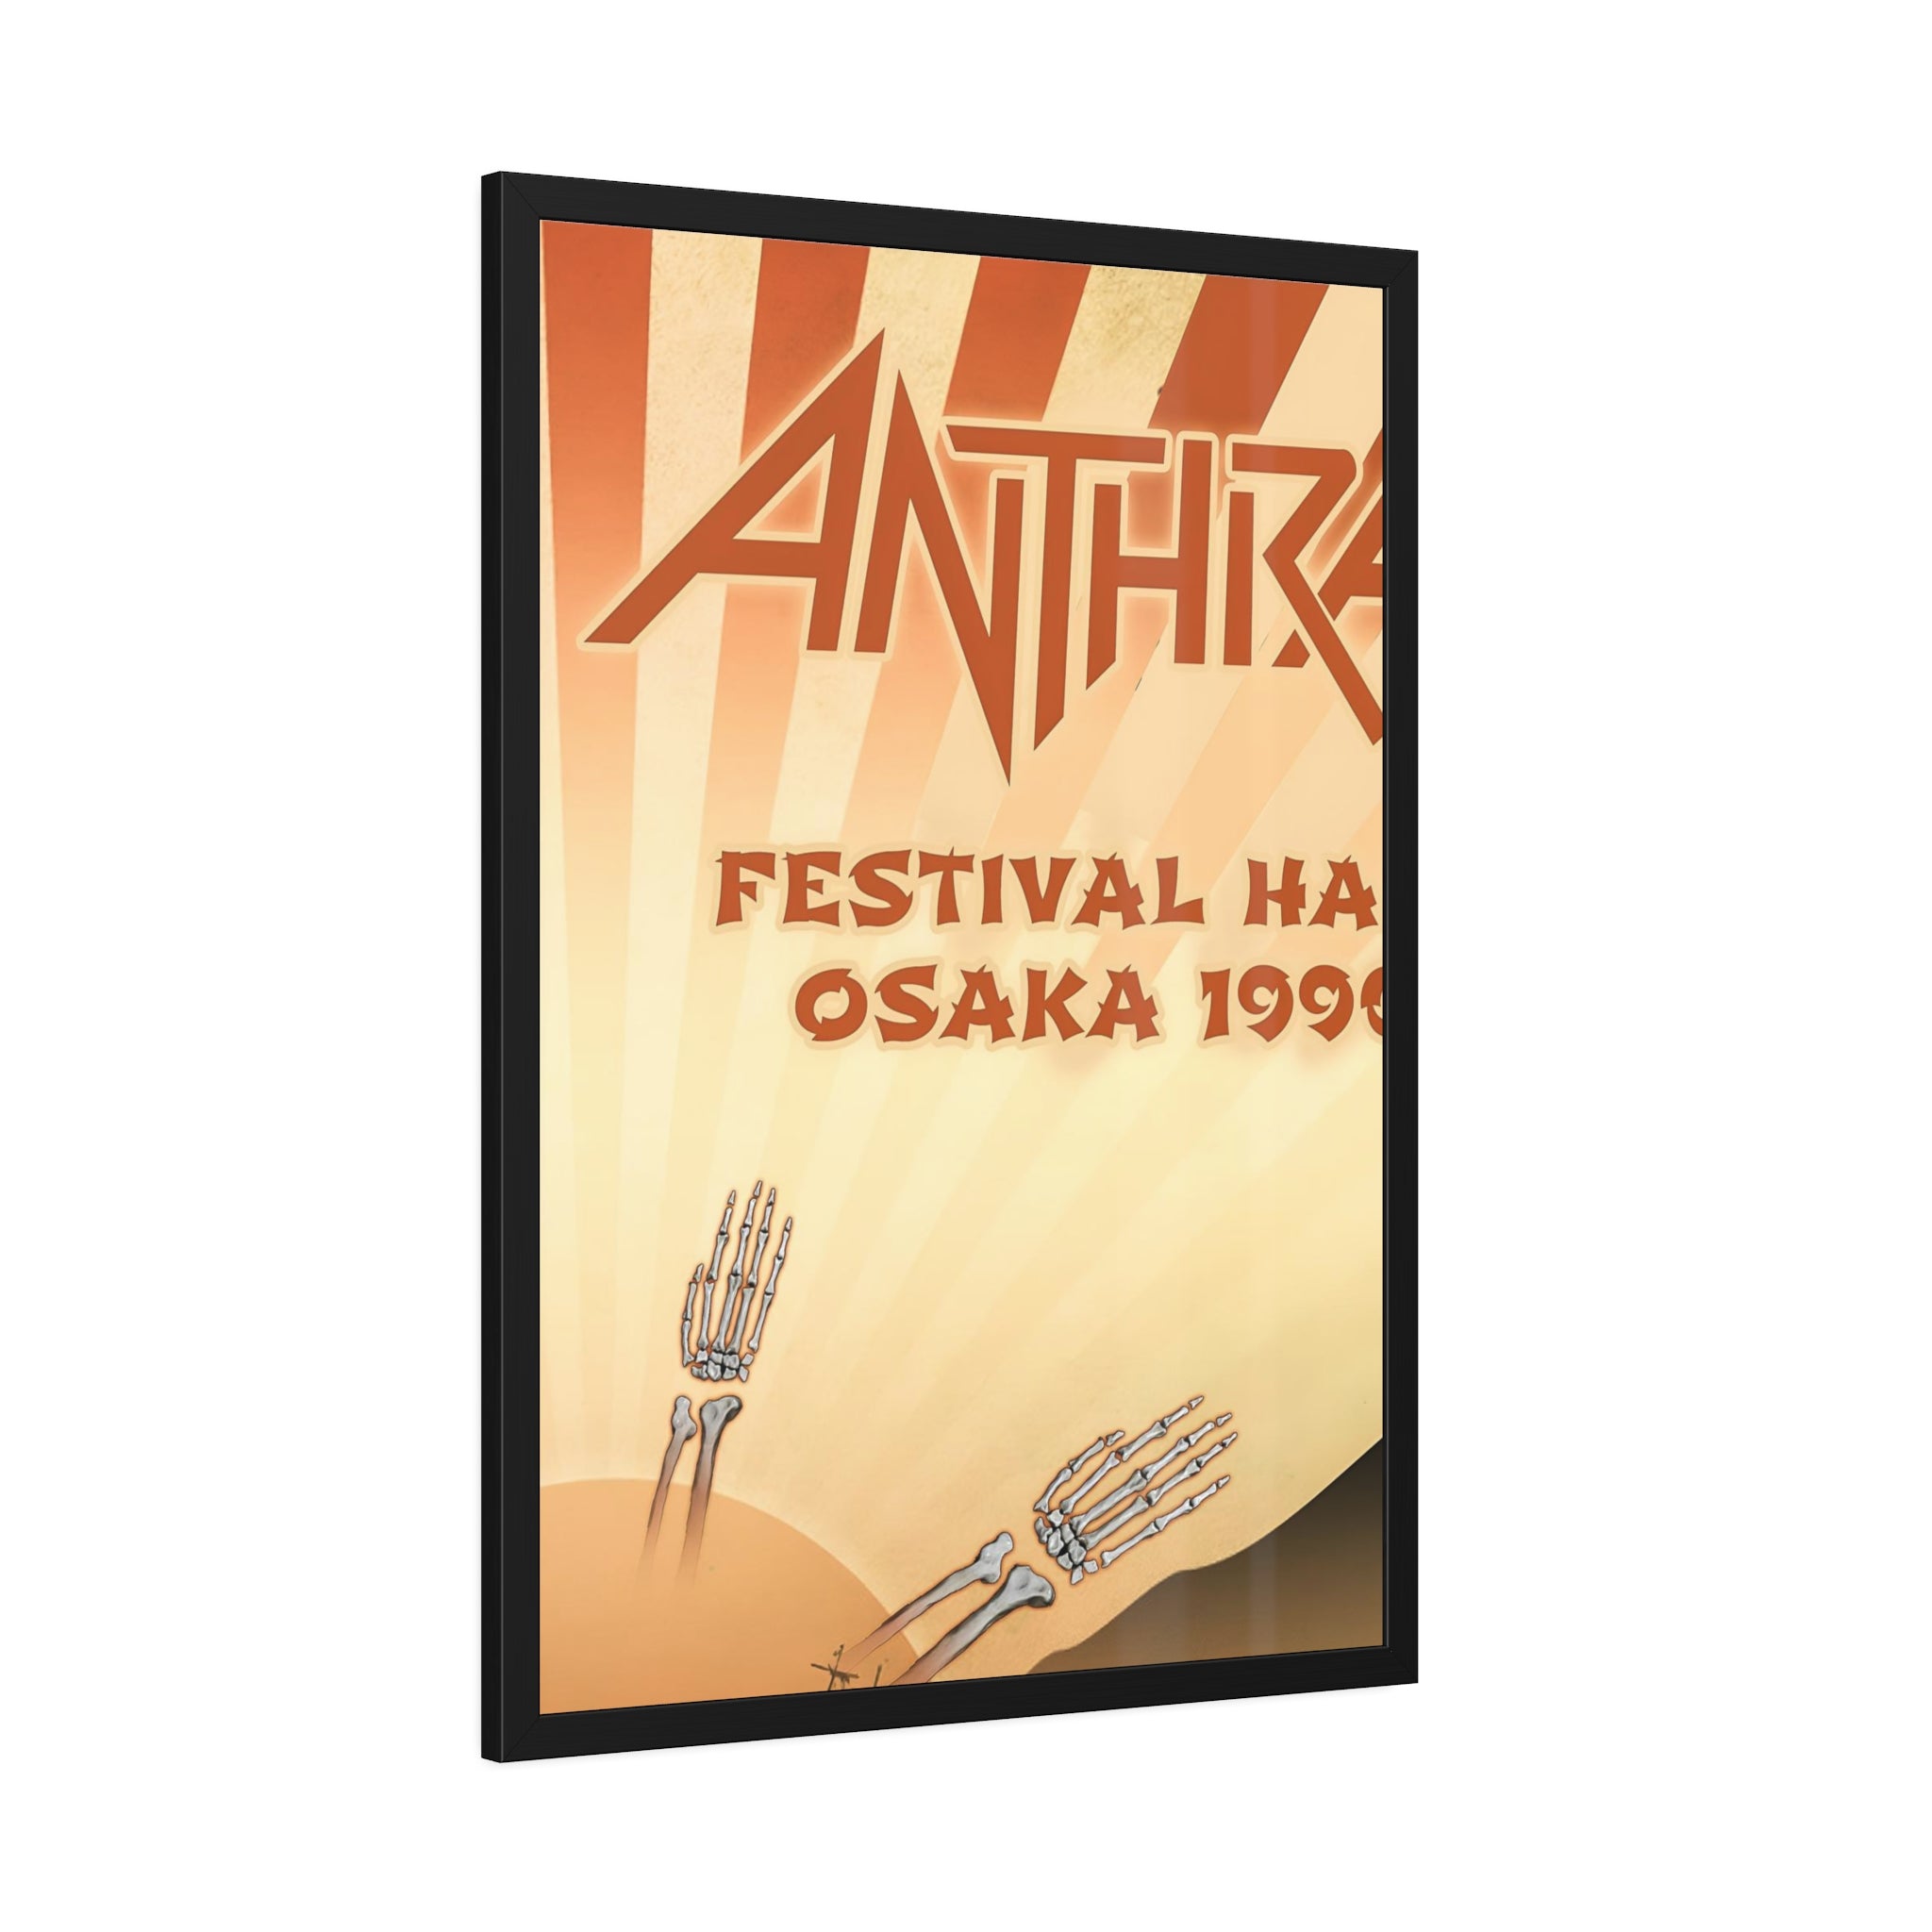 Anthrax Osaka 1990 Concert Poster